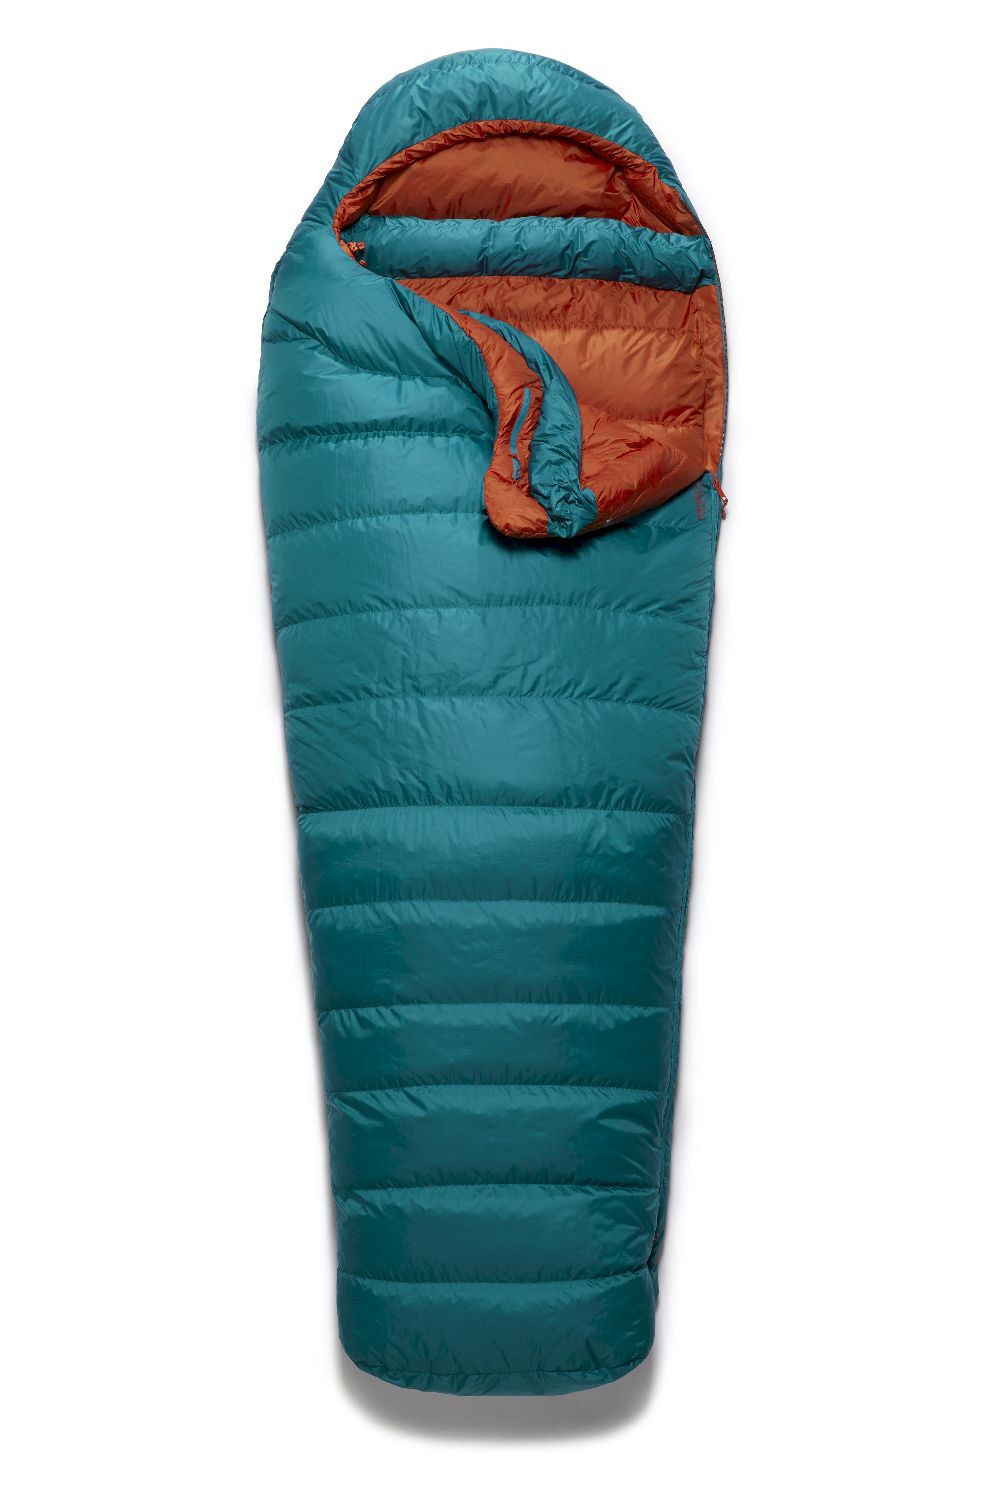 Rab Ascent 500 - Sleeping bag - Women's